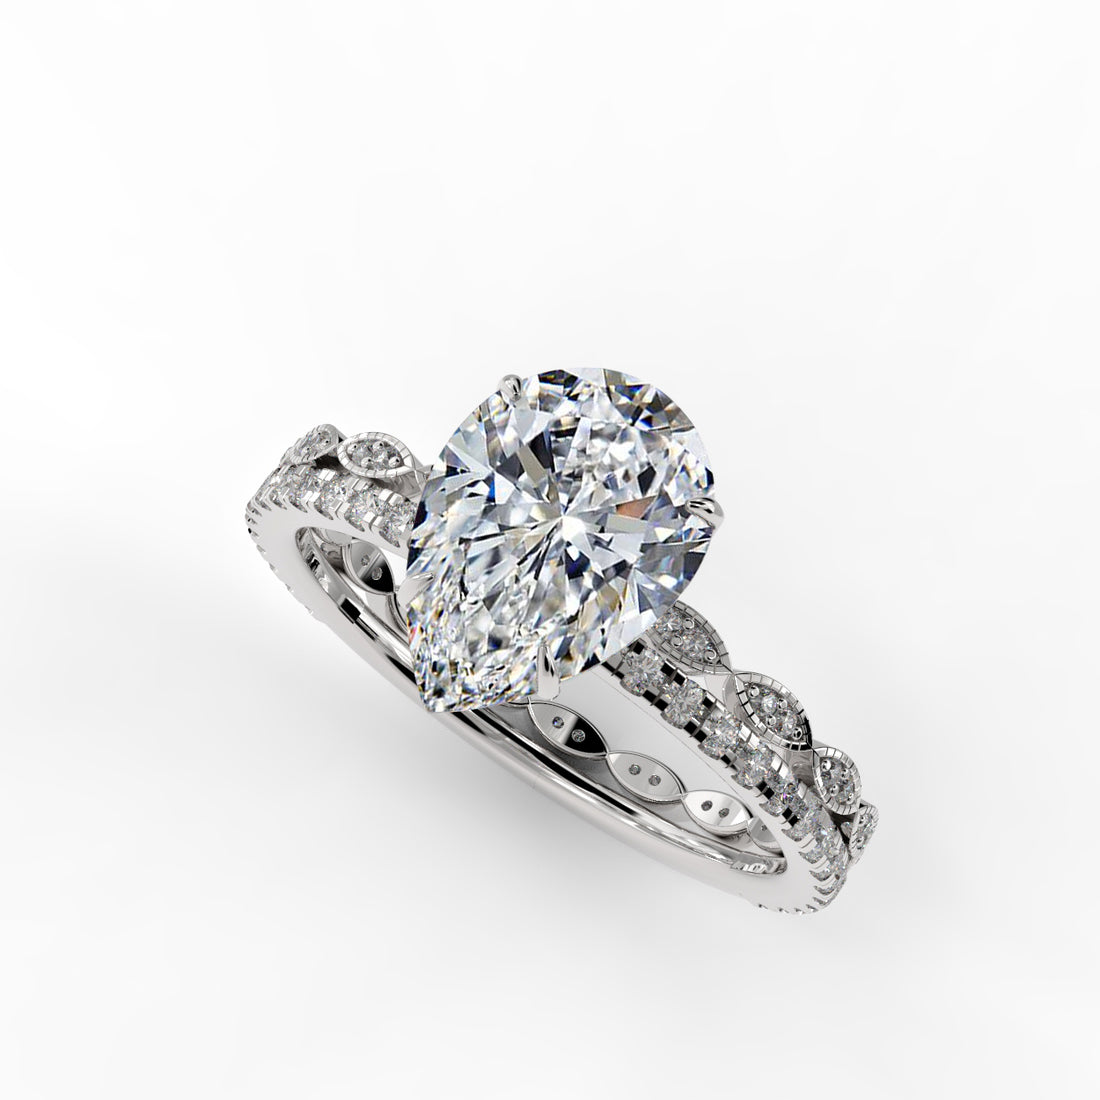 Pear Drop Cut Pave Engagement Ring Bridal Set - 502